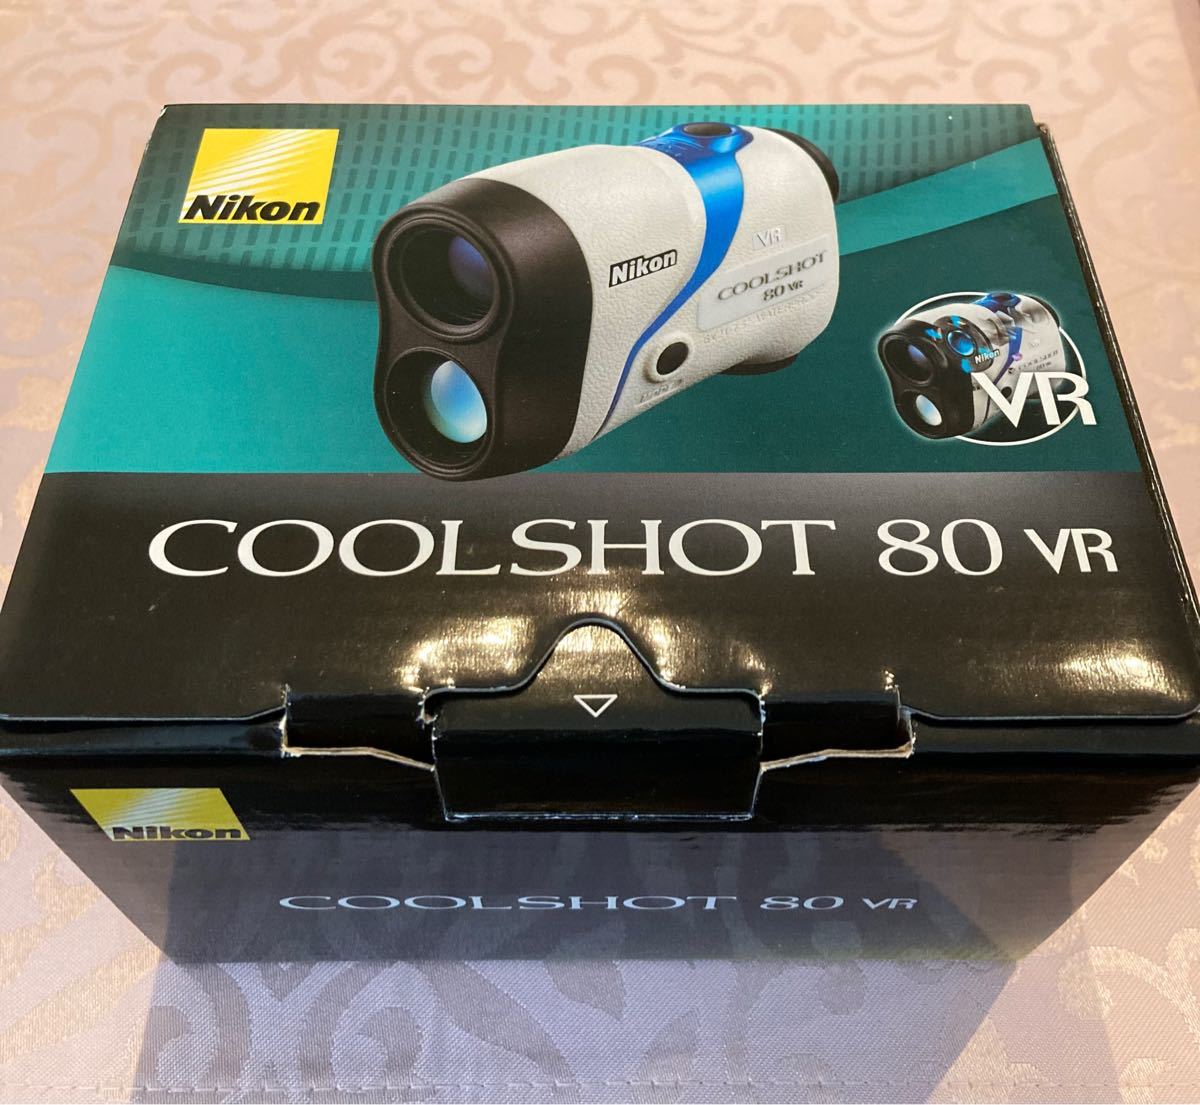 COOLSHOT Nikon ニコン クールショット 80VR ゴルフ用レーザー距離計 